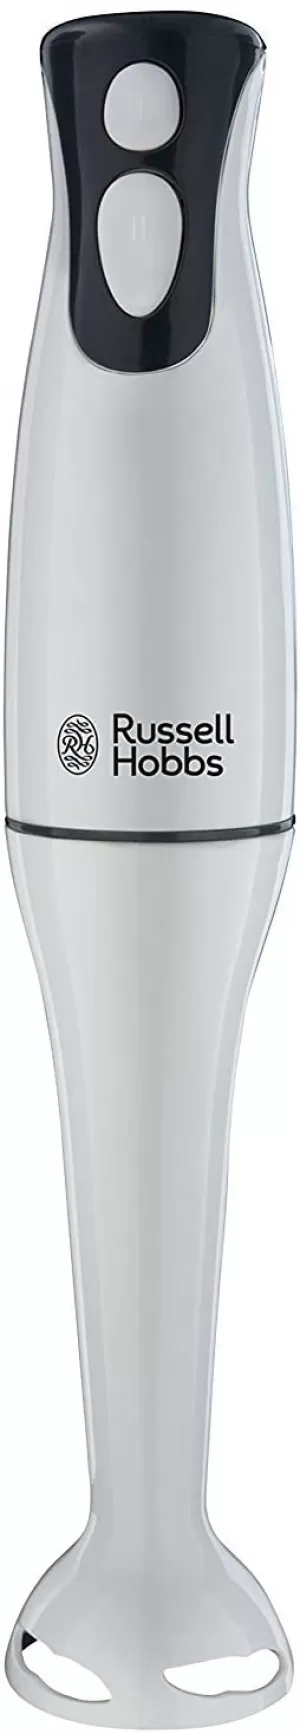 Russell Hobbs 22241 200W Hand Blender